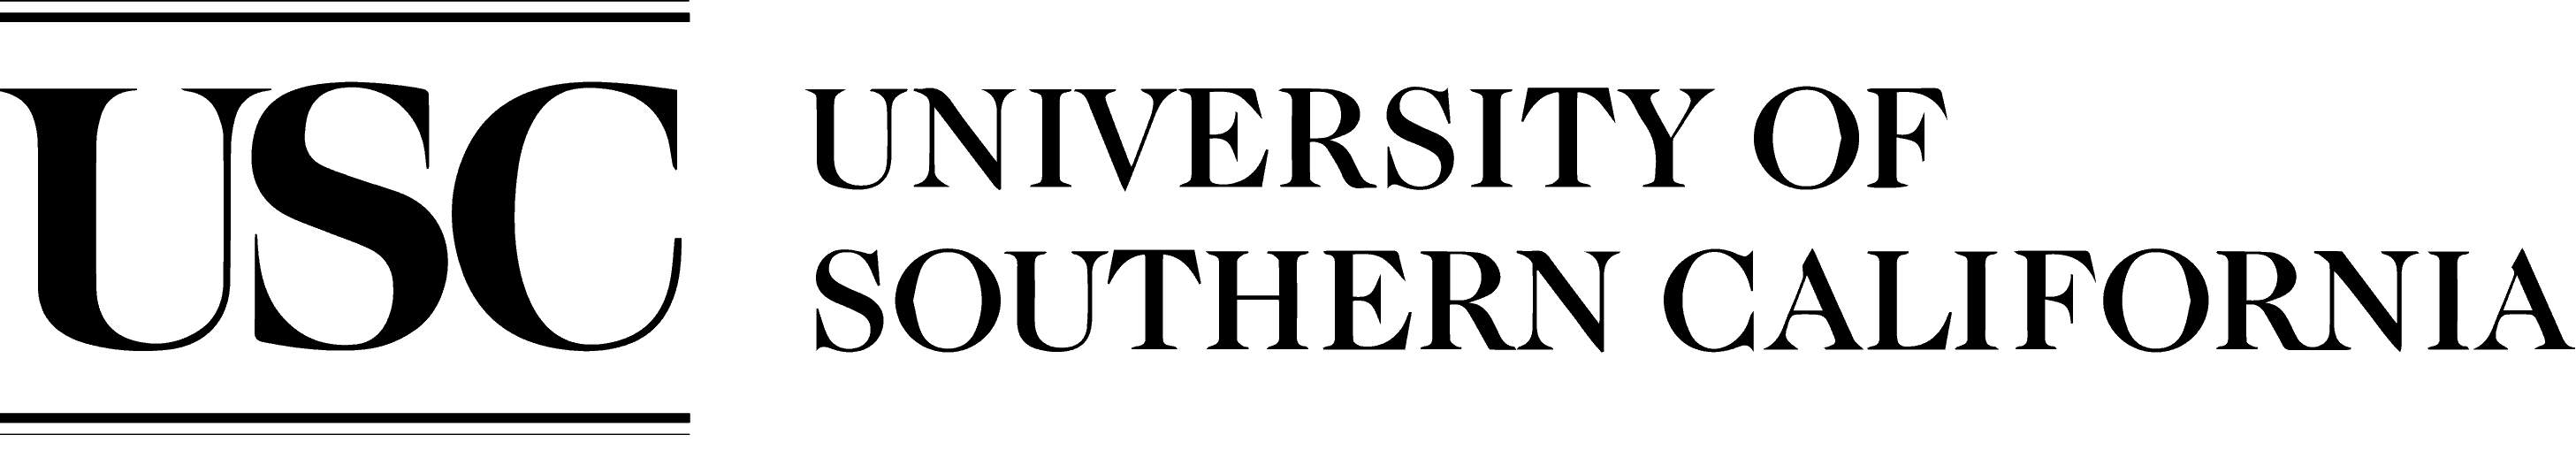 University of Southern California logo in black